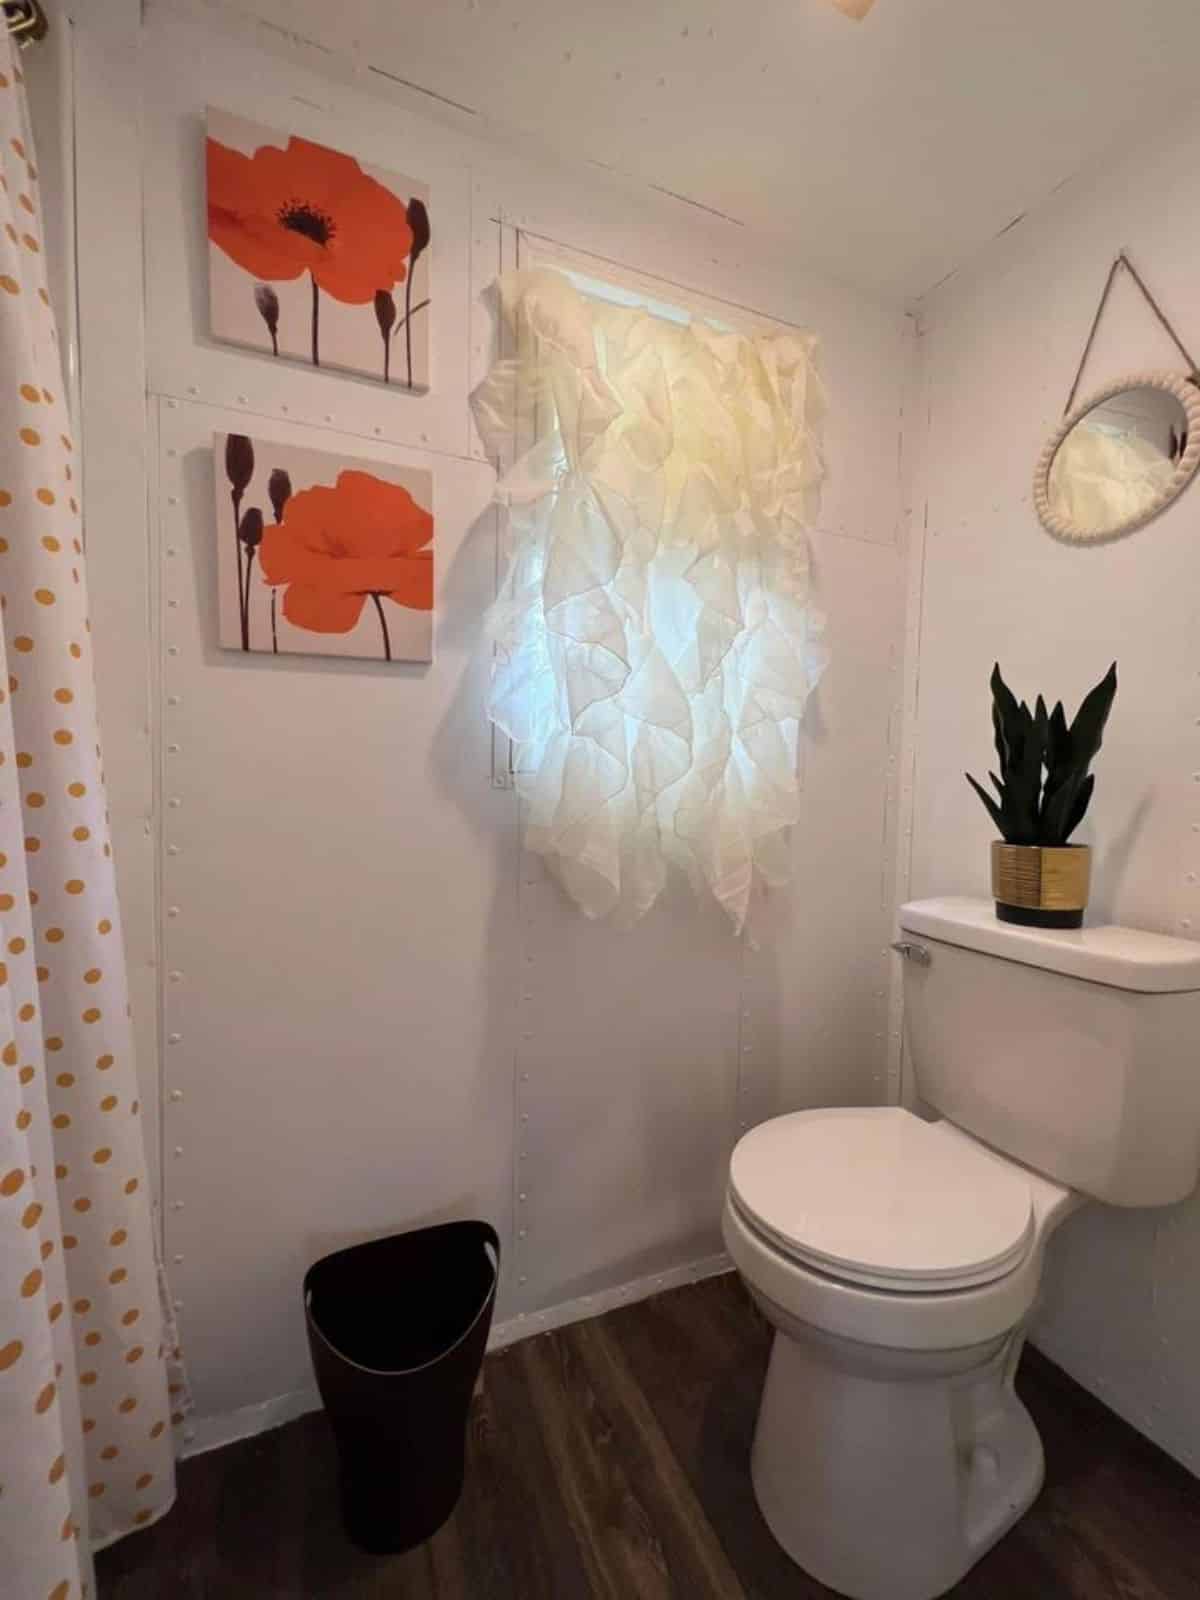 Bathroom of 16’ Turnkey Ready Tiny House has a standard toilet, shower